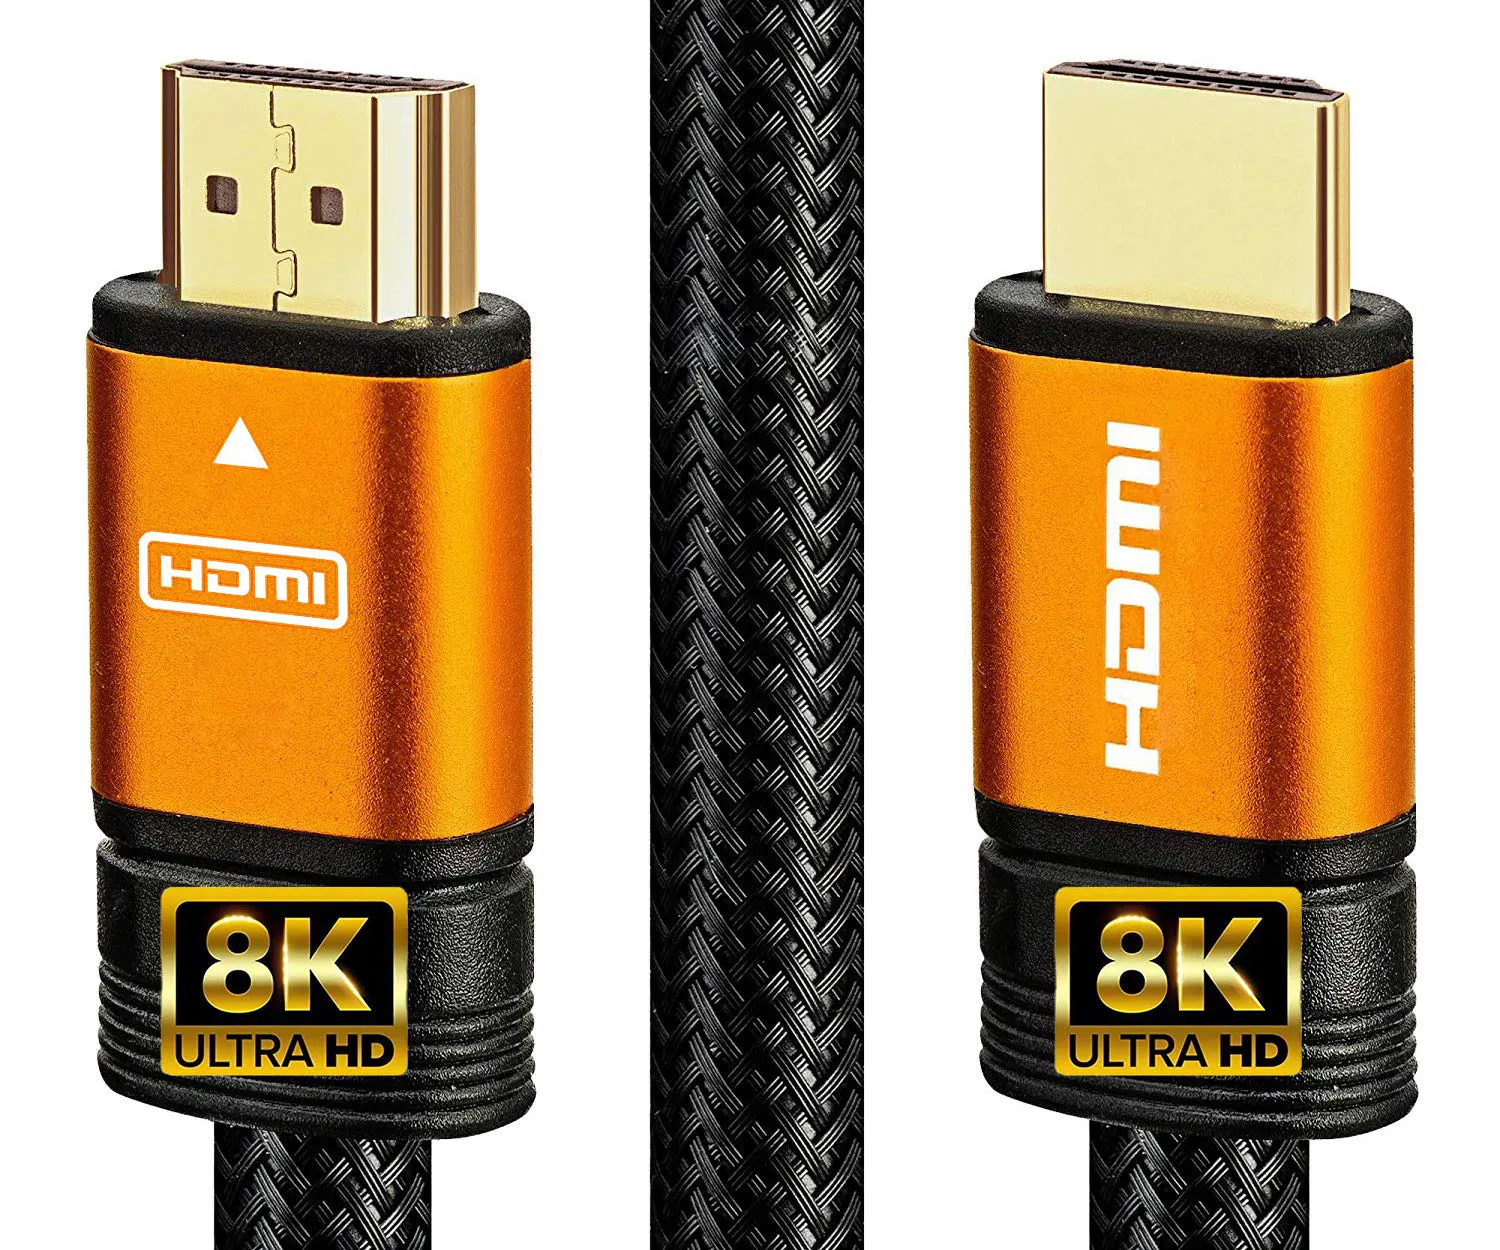 OEM ambalaj kutusu farklı renk HDMI kablosu 8K desteği 6 1 Out Hdmi anahtarı 3D 60HZ yüksek çözünürlüklü HDMI 2.1 Cvbo